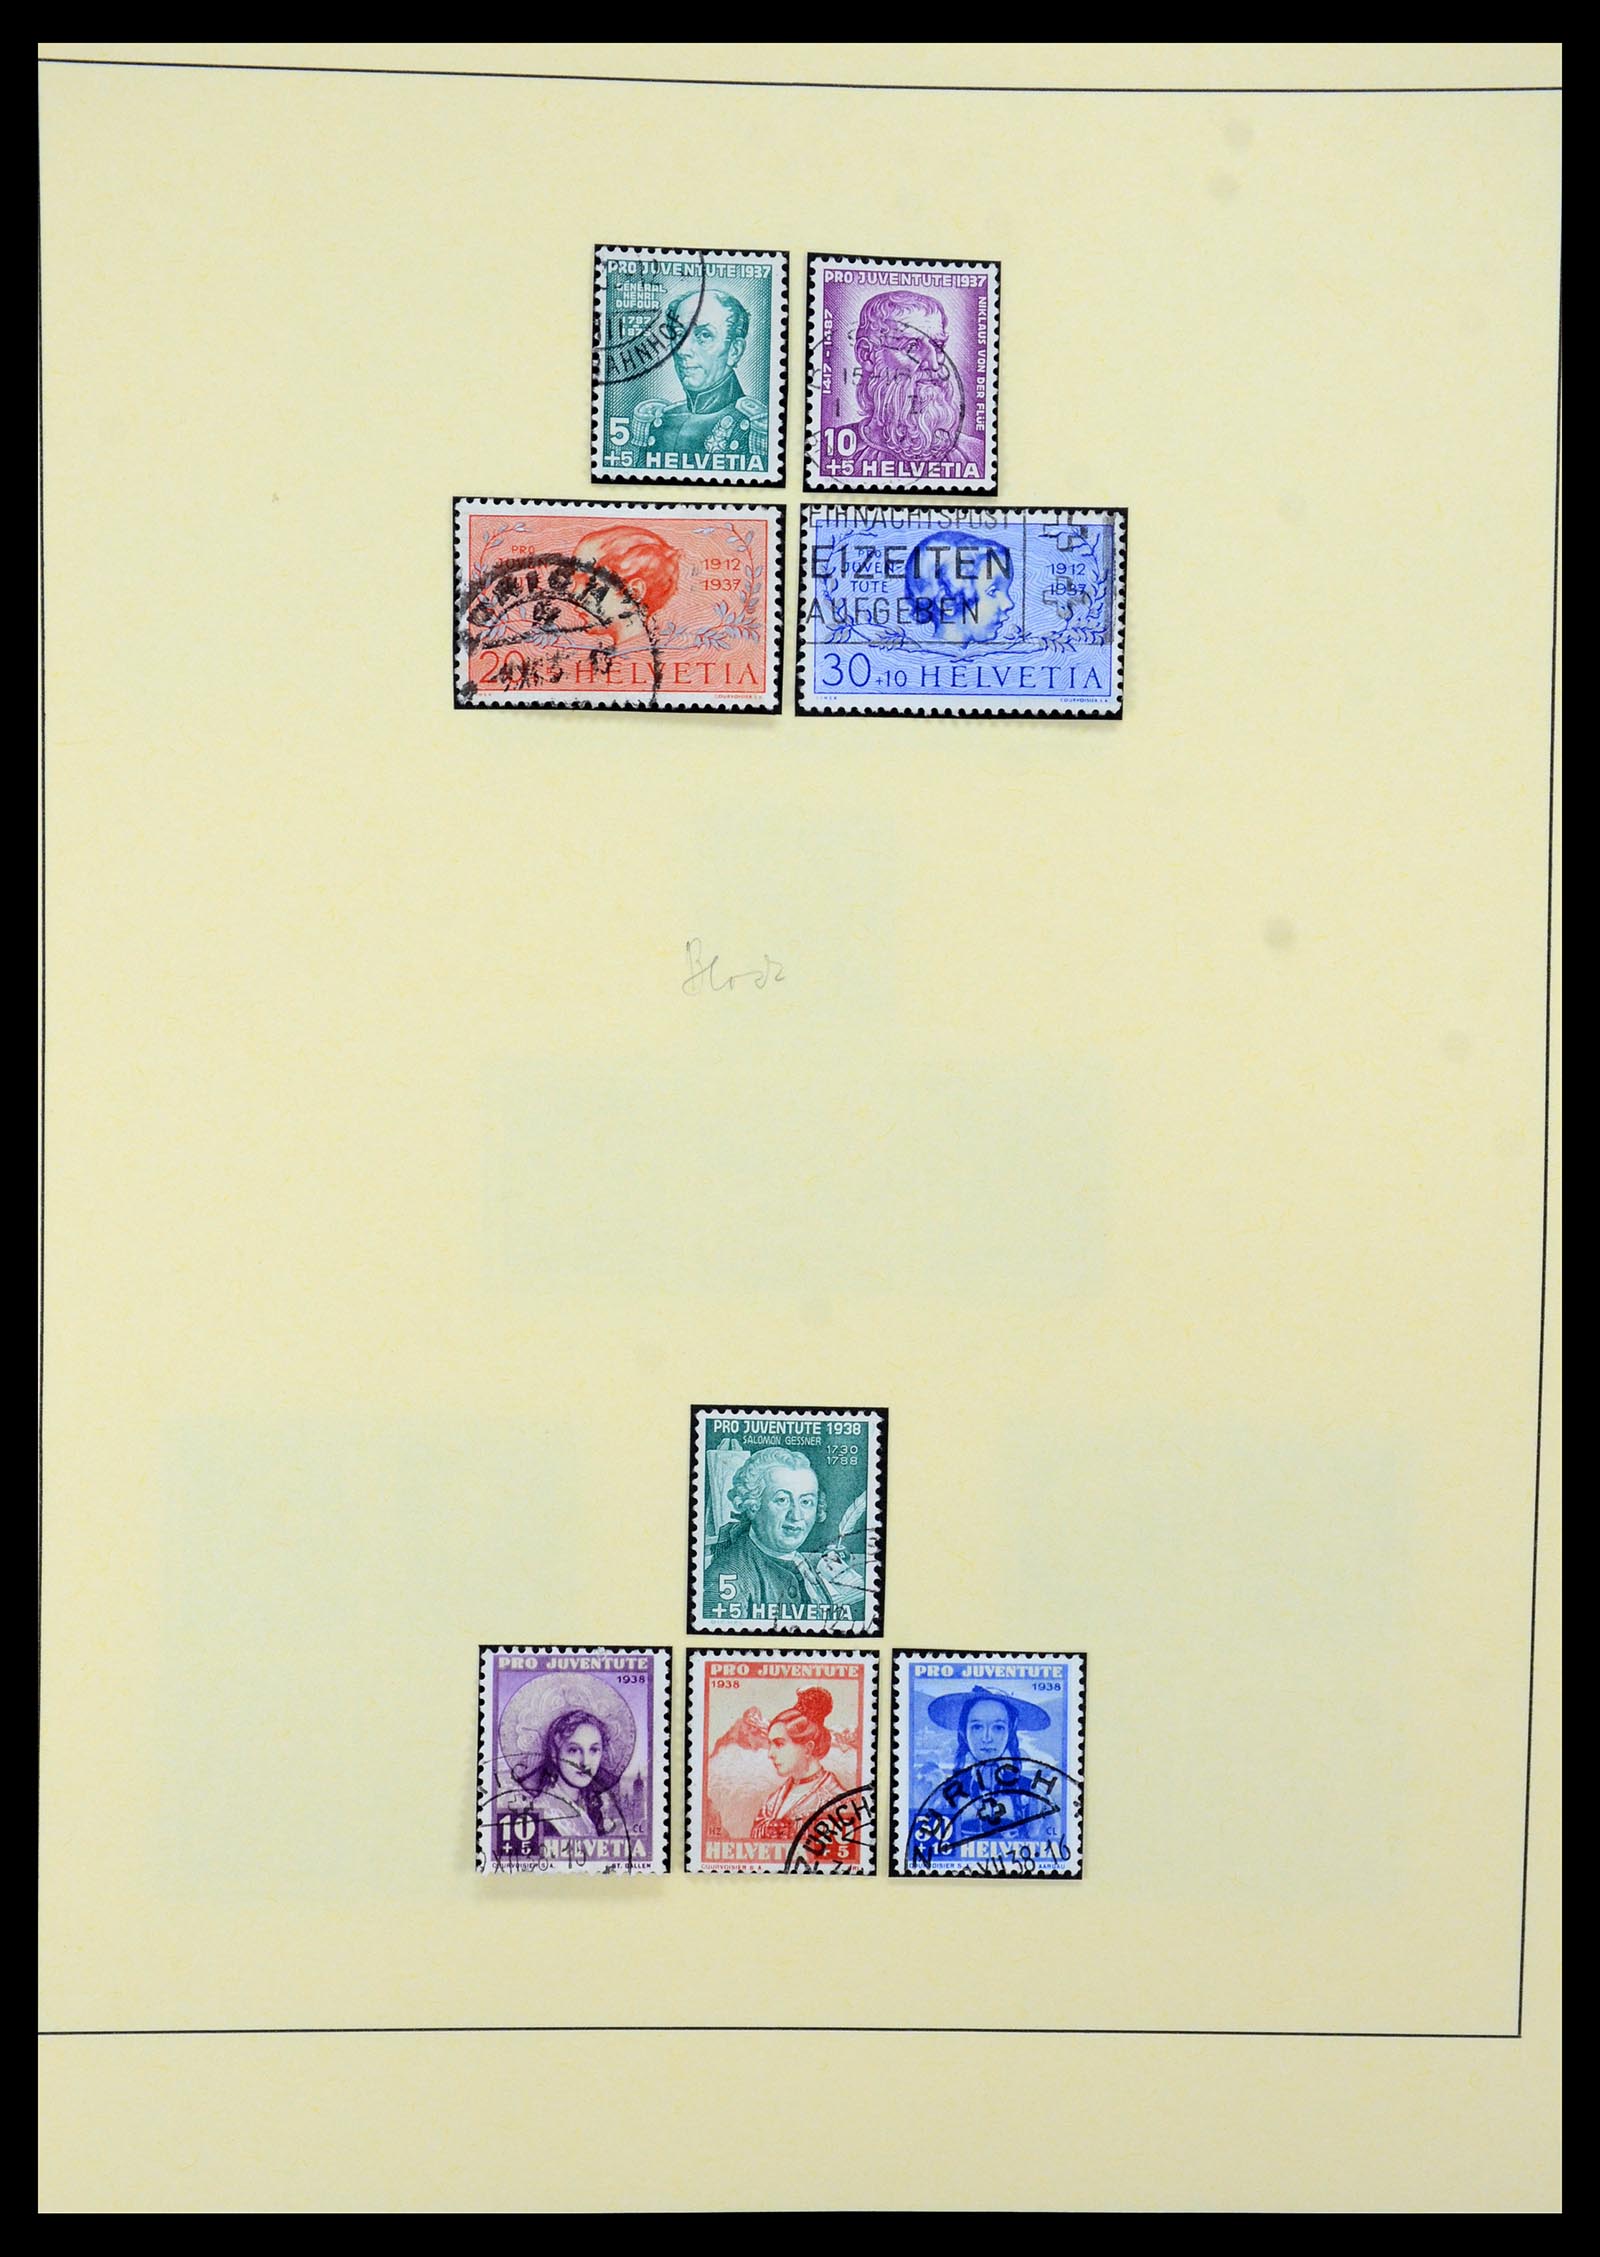 35668 005 - Stamp Collection 35668 Switzerland Pro Juventute and Pro Patria 1910-197